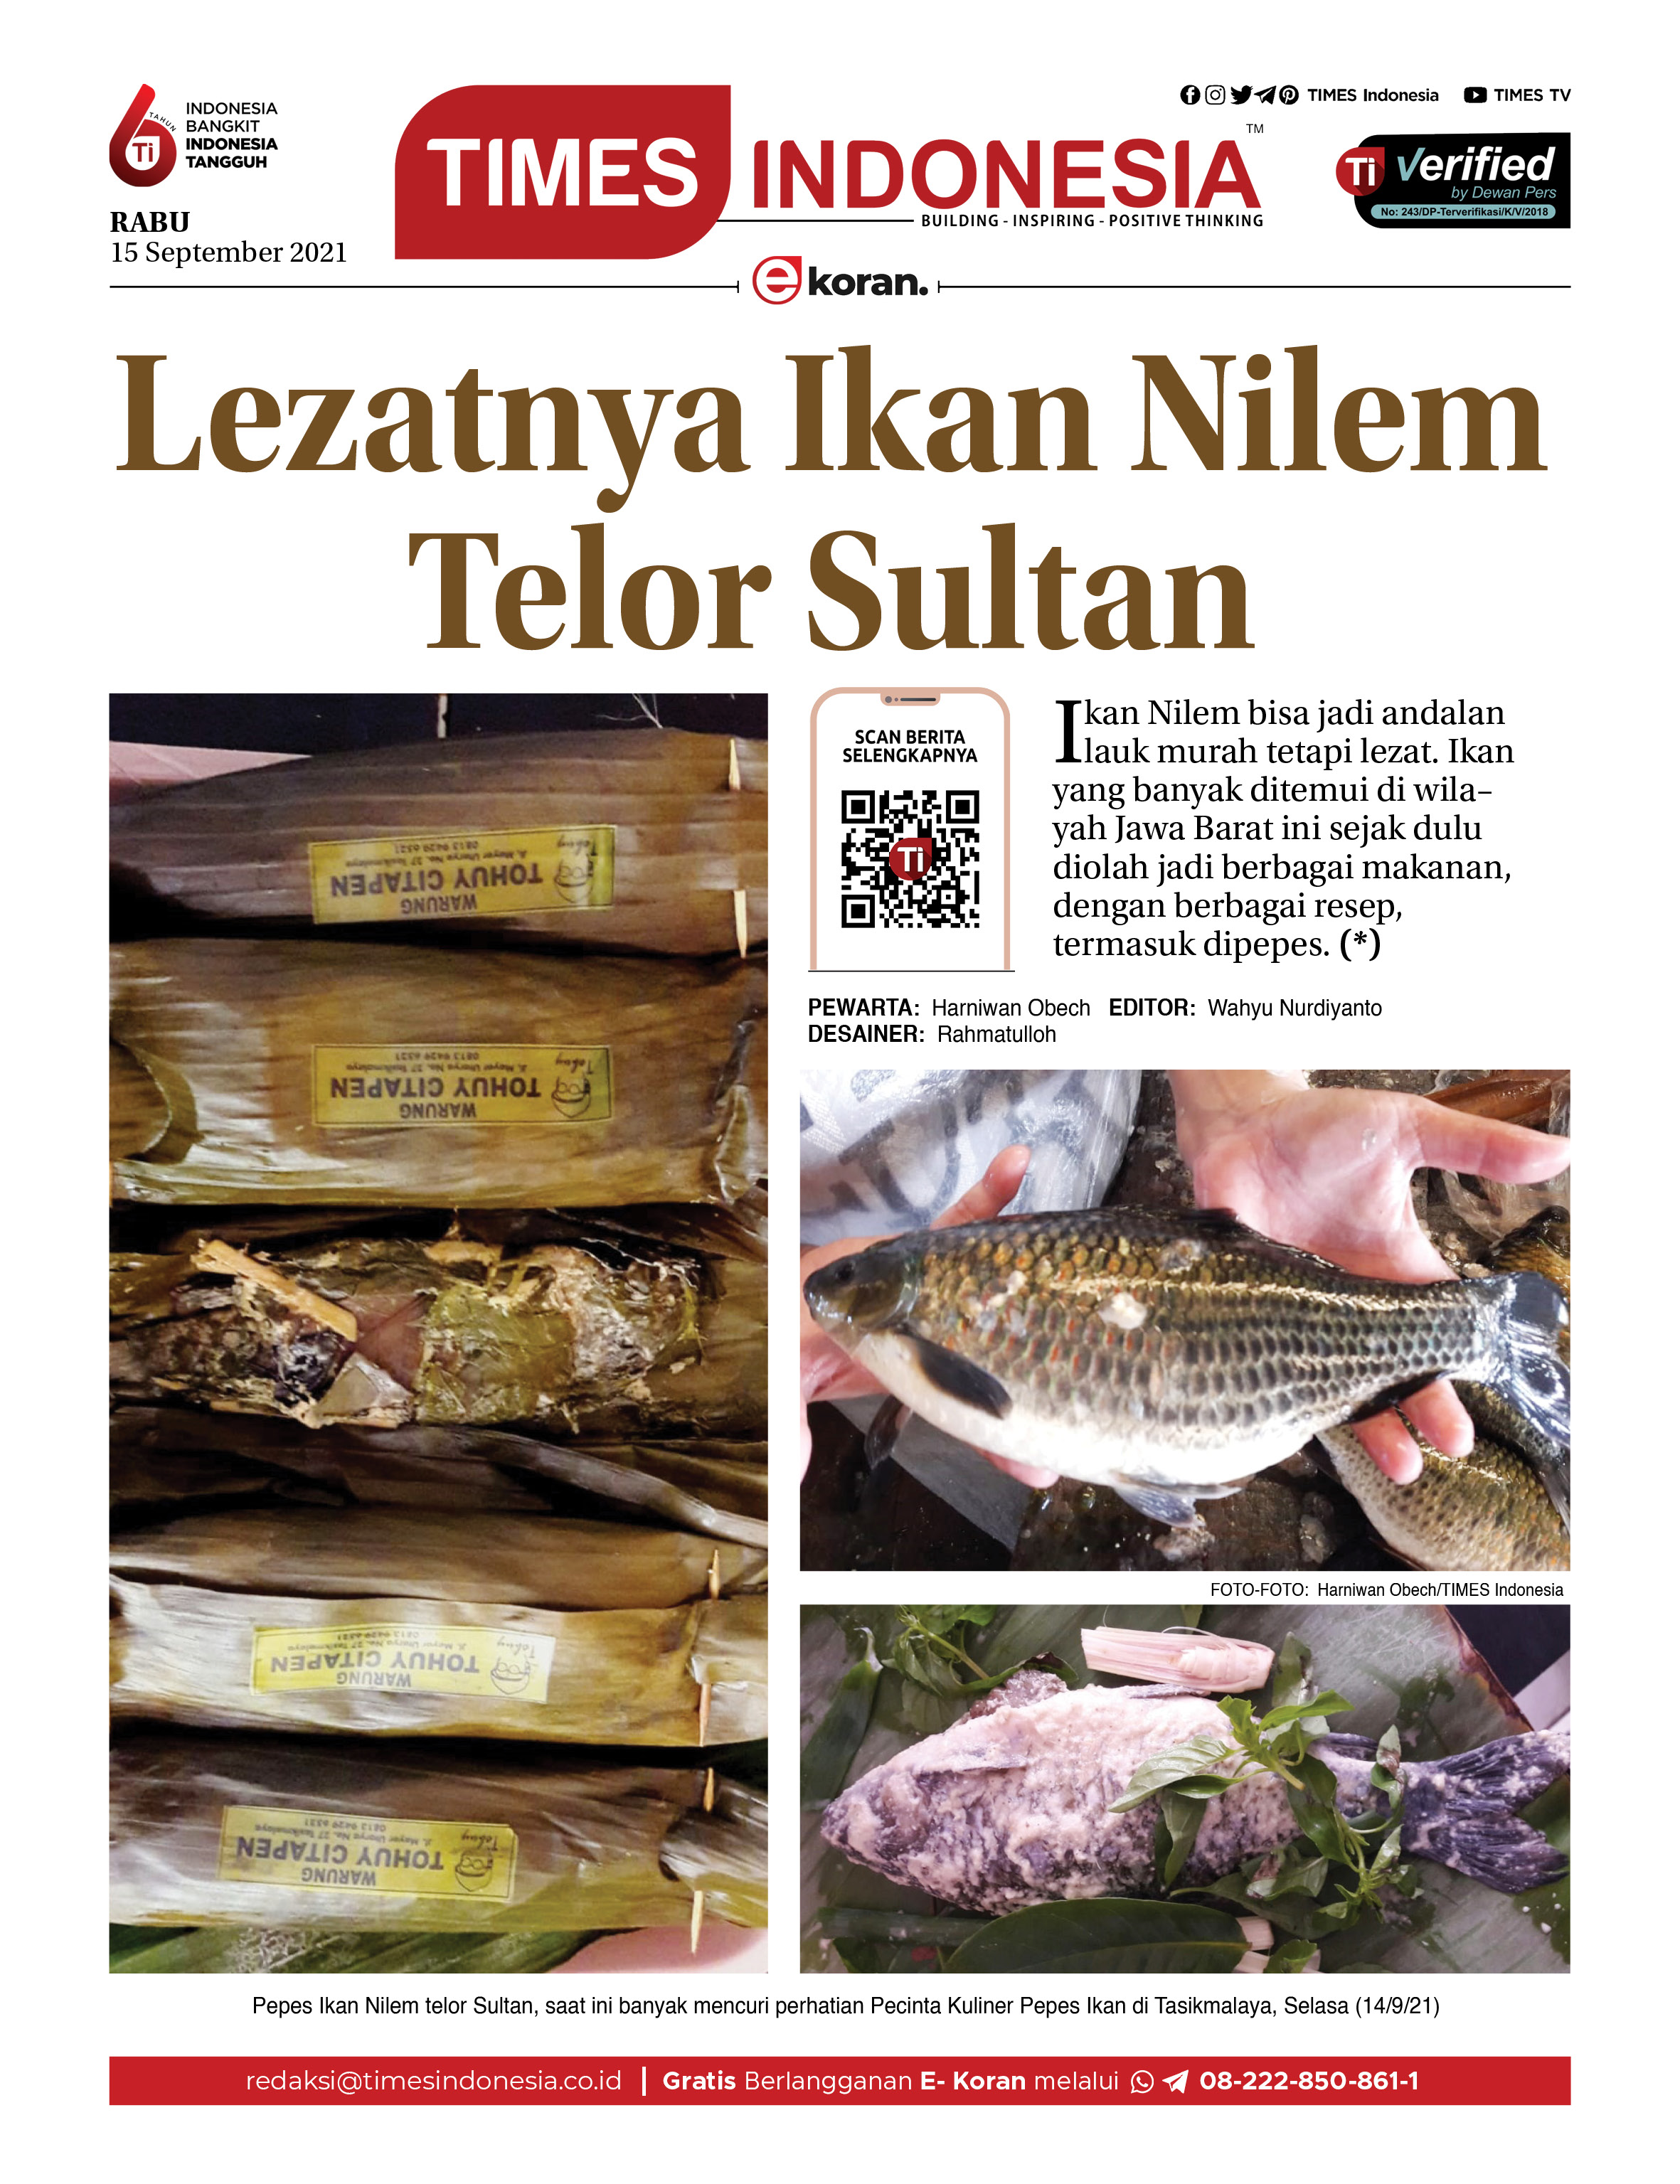 Ekoran-Edisi-Rabu-15-September-2021-Lezatnya-Ikan-Nilem-Telor-Sultan..jpg